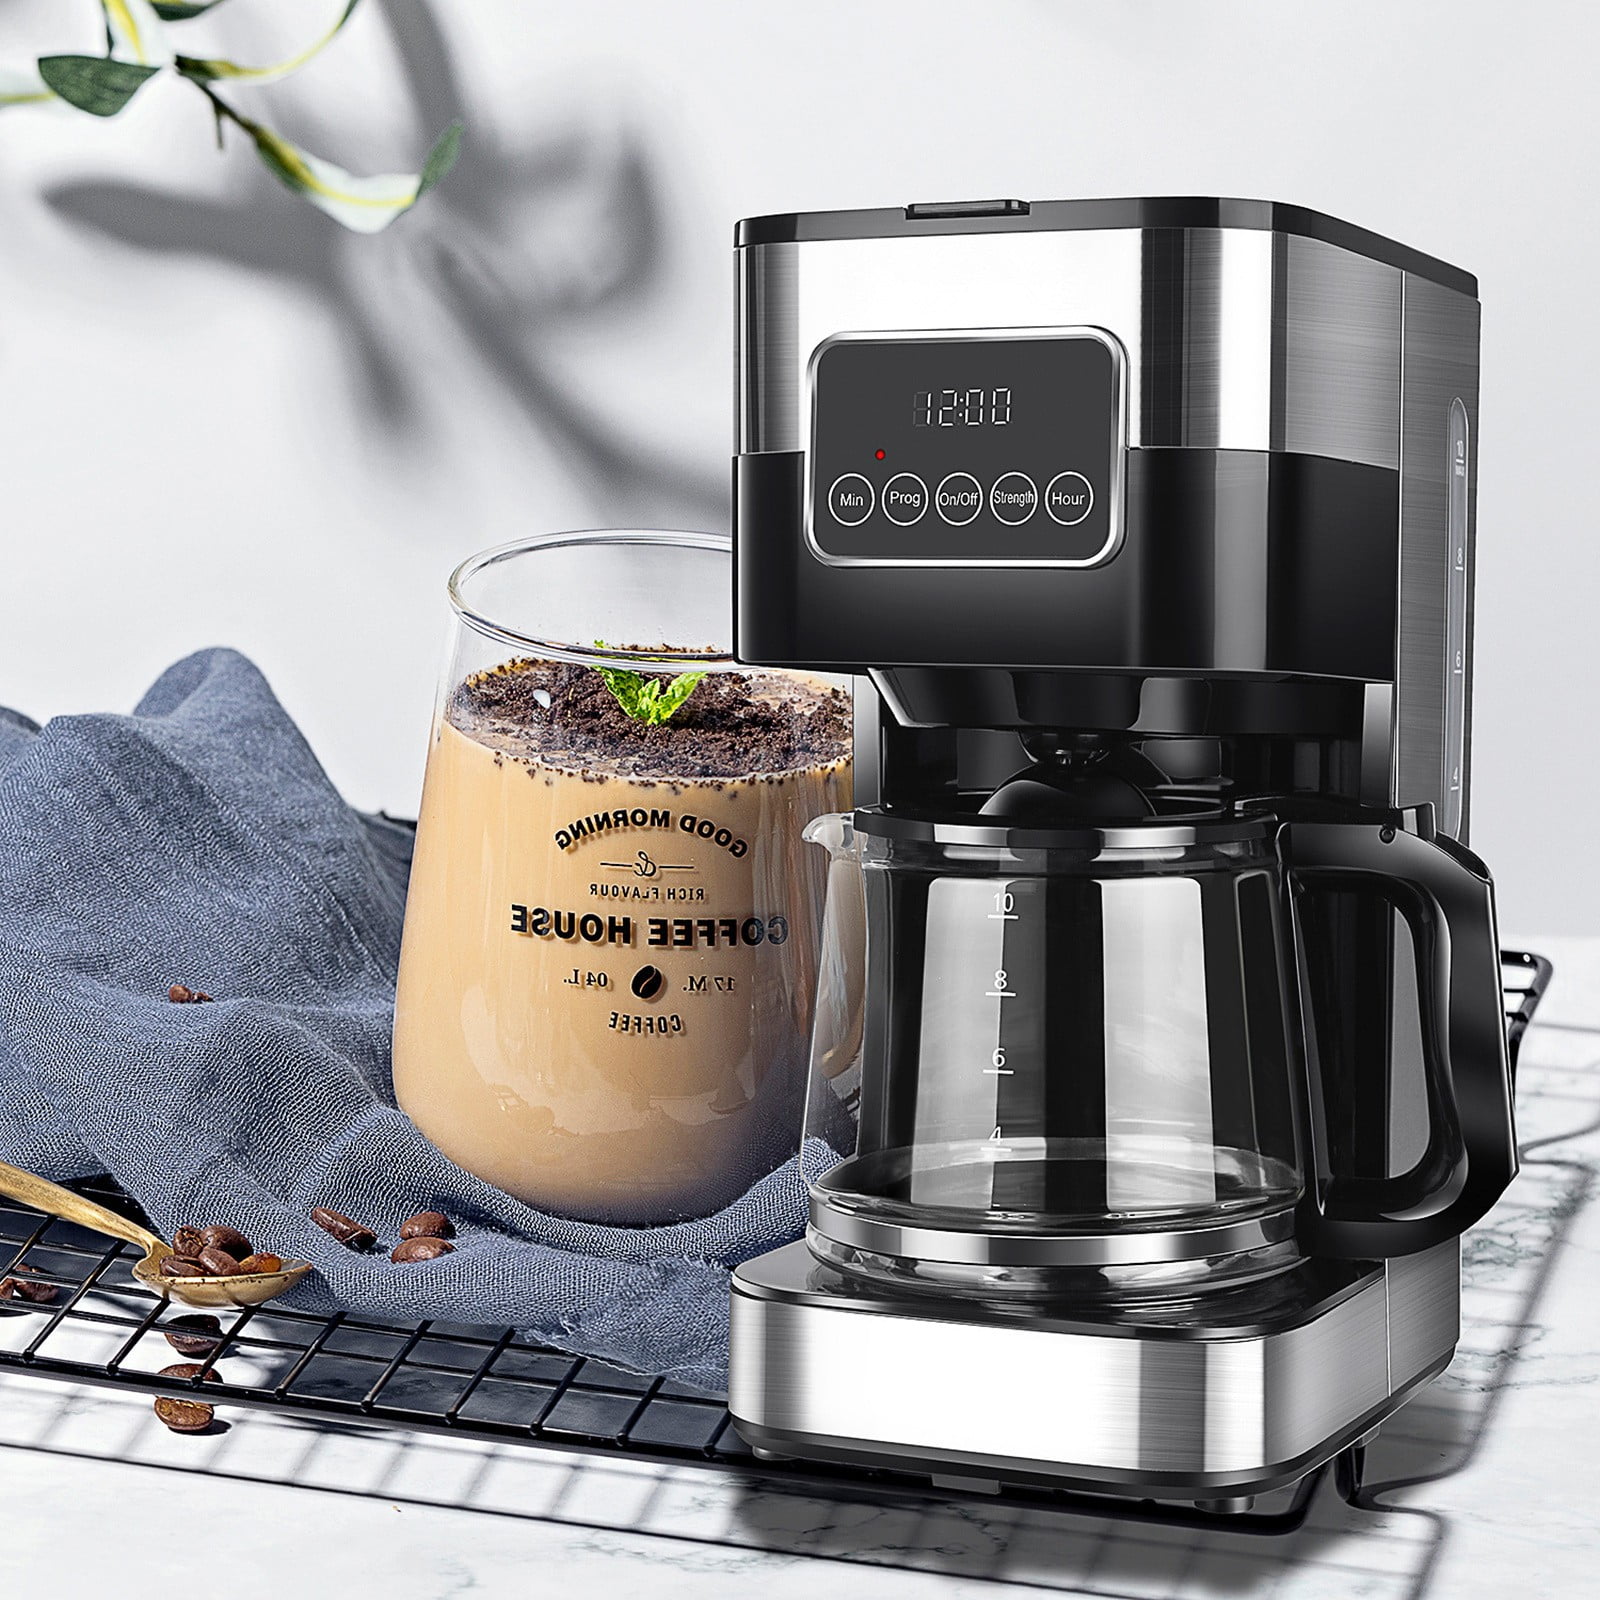 SHARDOR Drip Coffee Maker, Programmable 10-cup Coffee Machine with